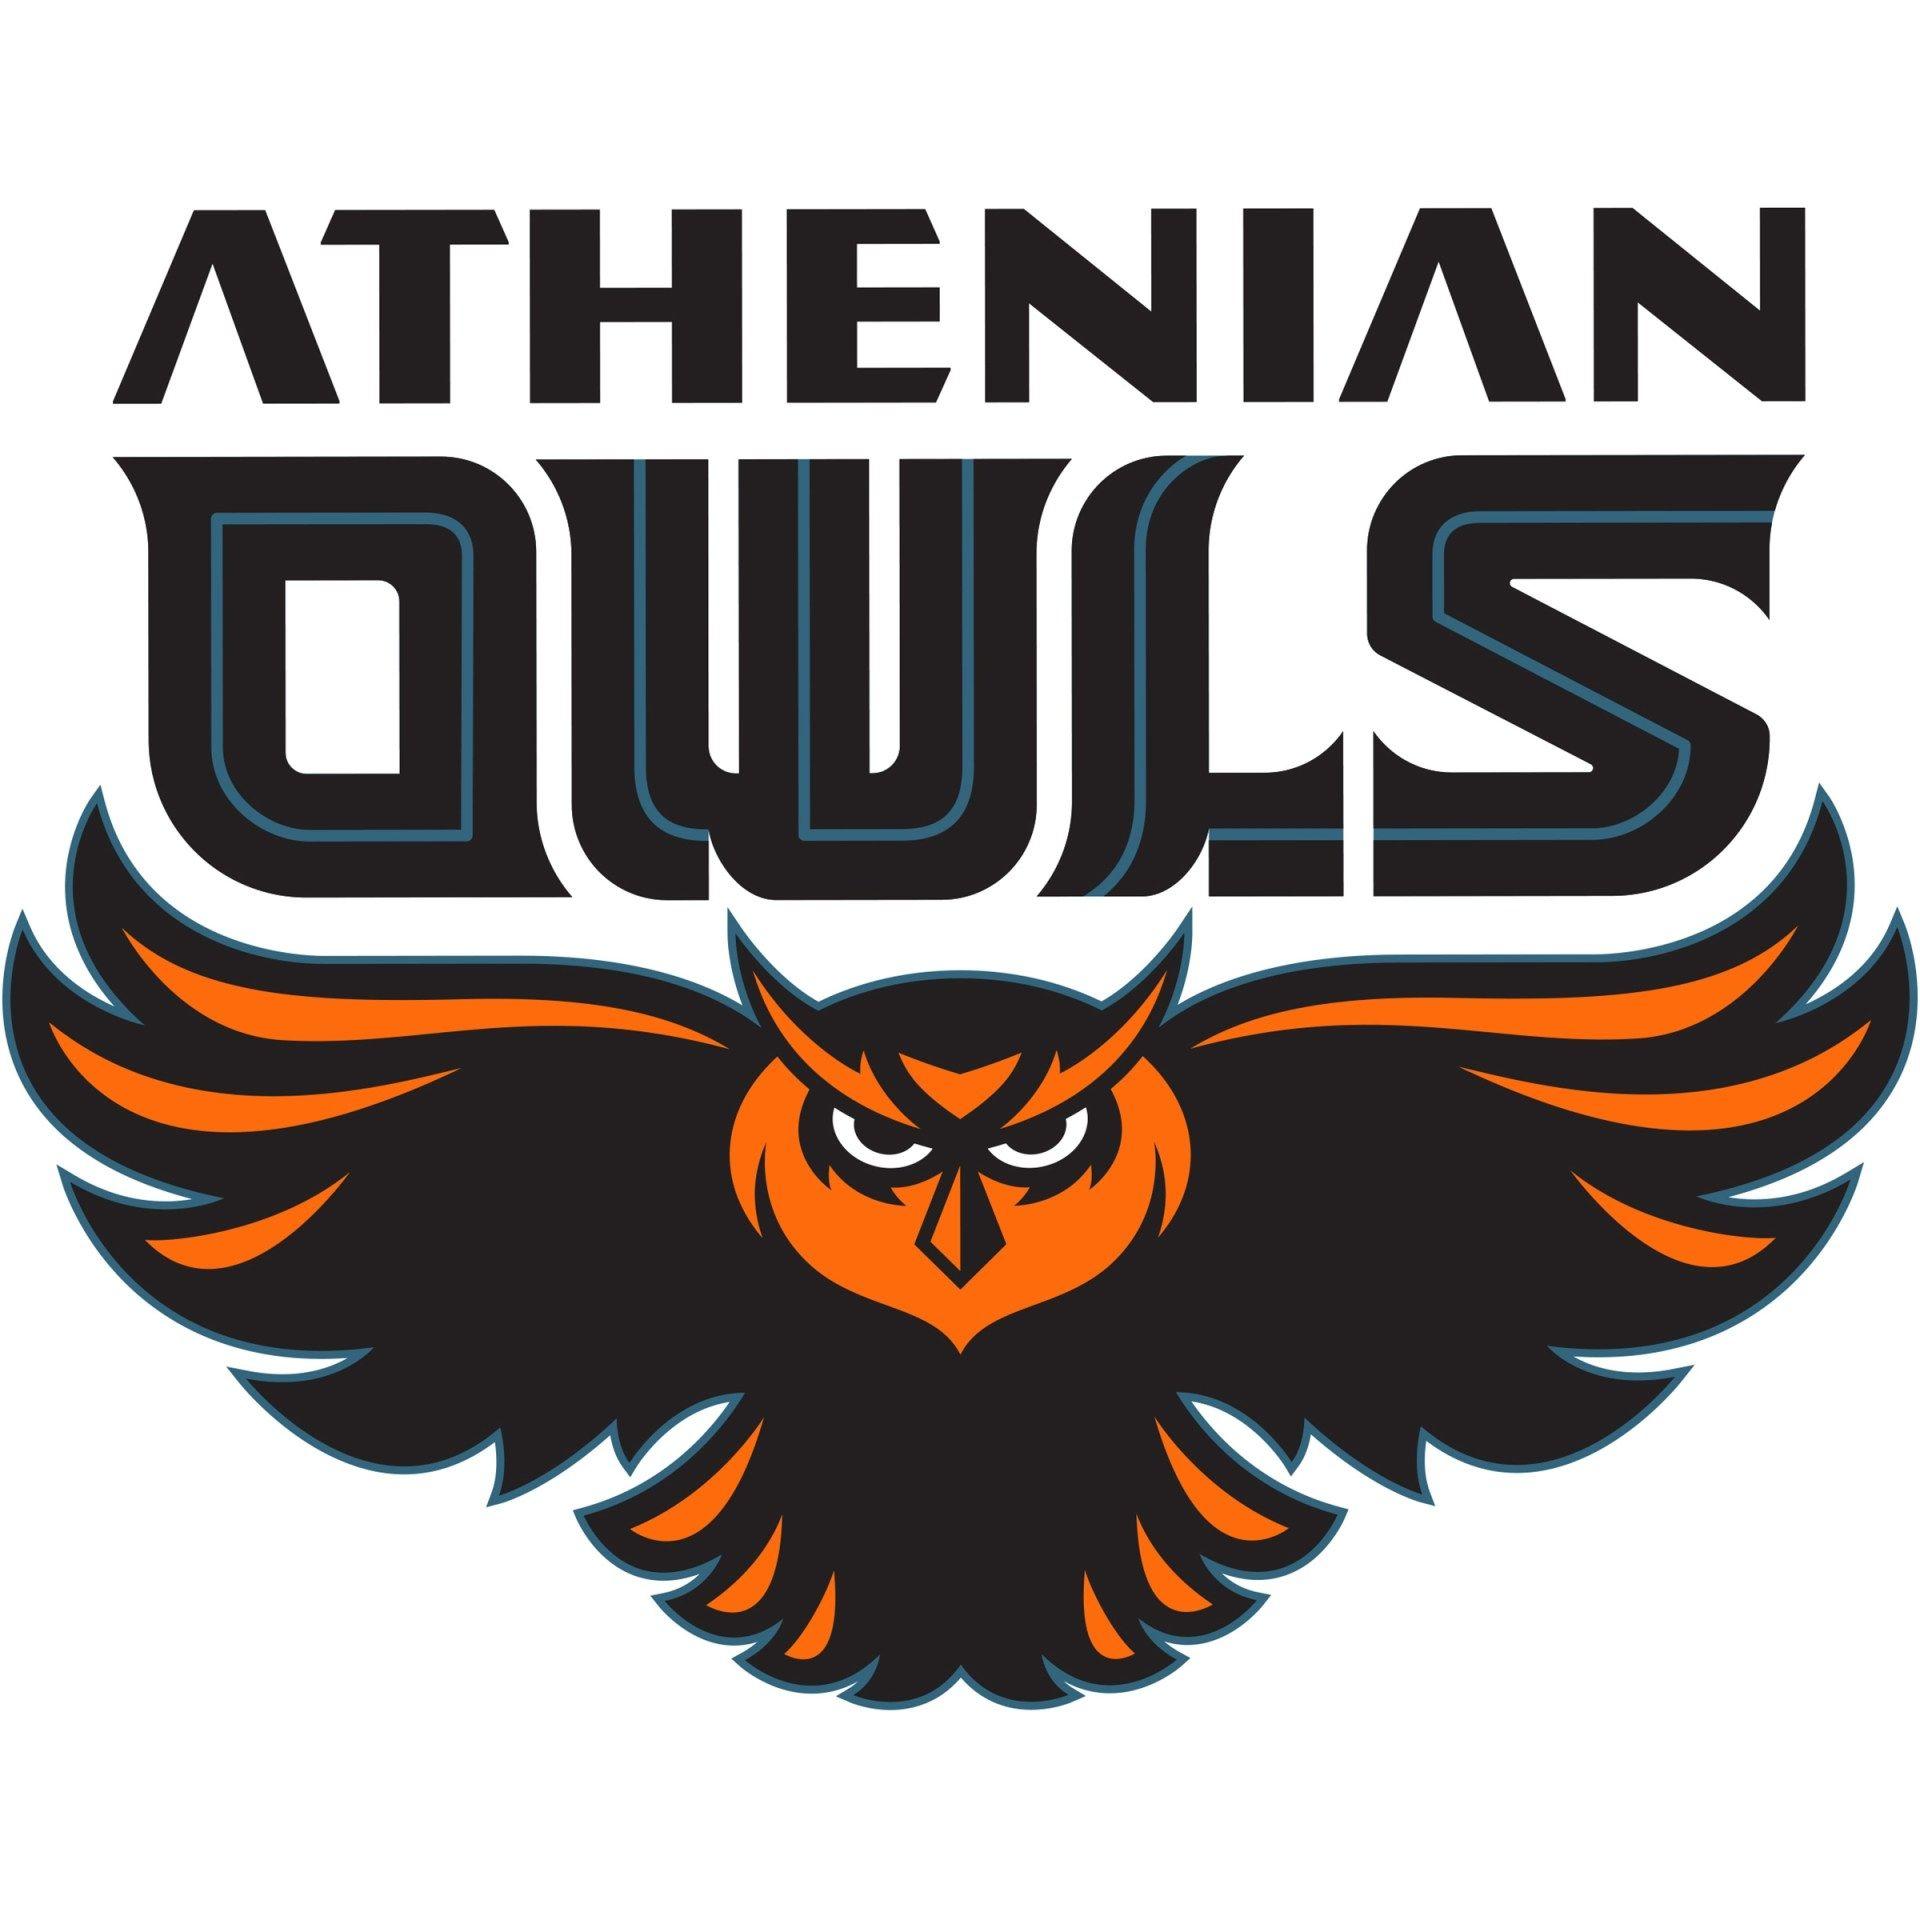 Athenian Logo - Athletics & Fitness. The Athenian School